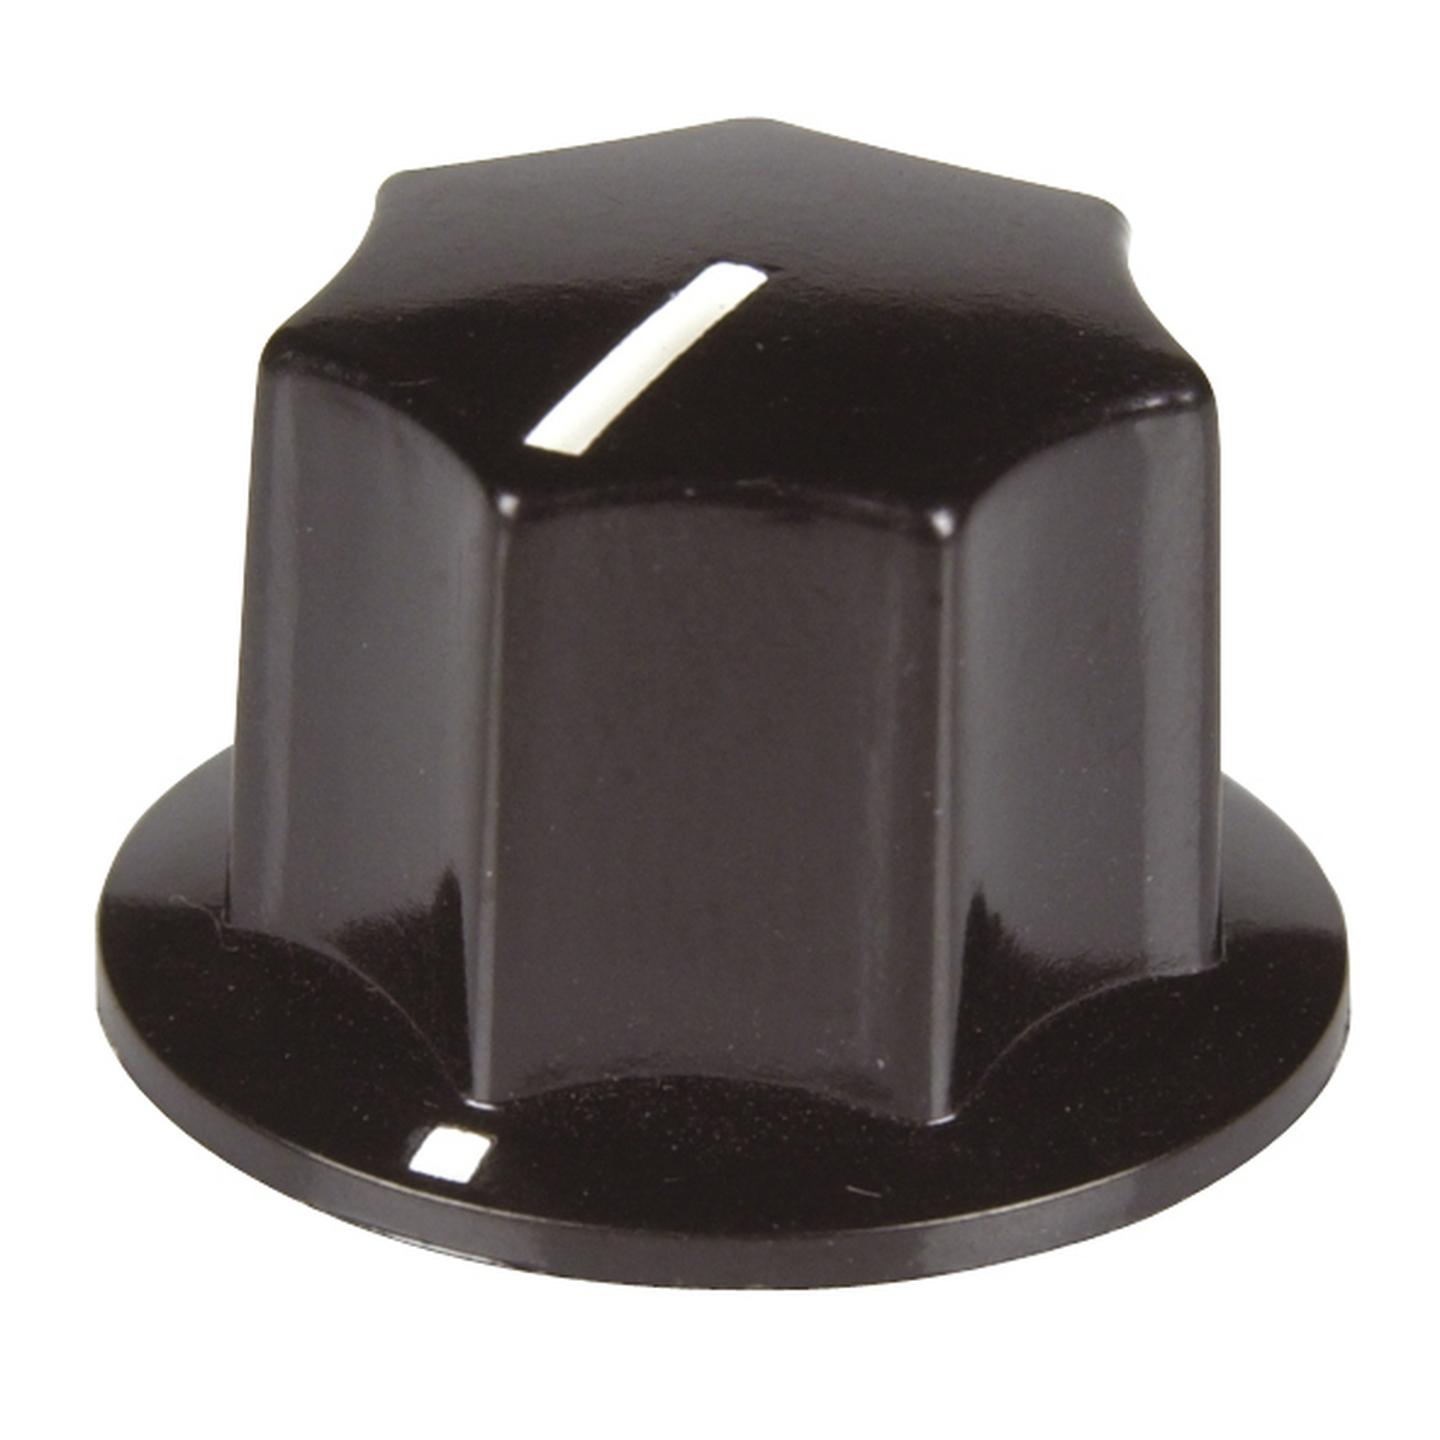 23mm Knob - Black Plastic with Pointer